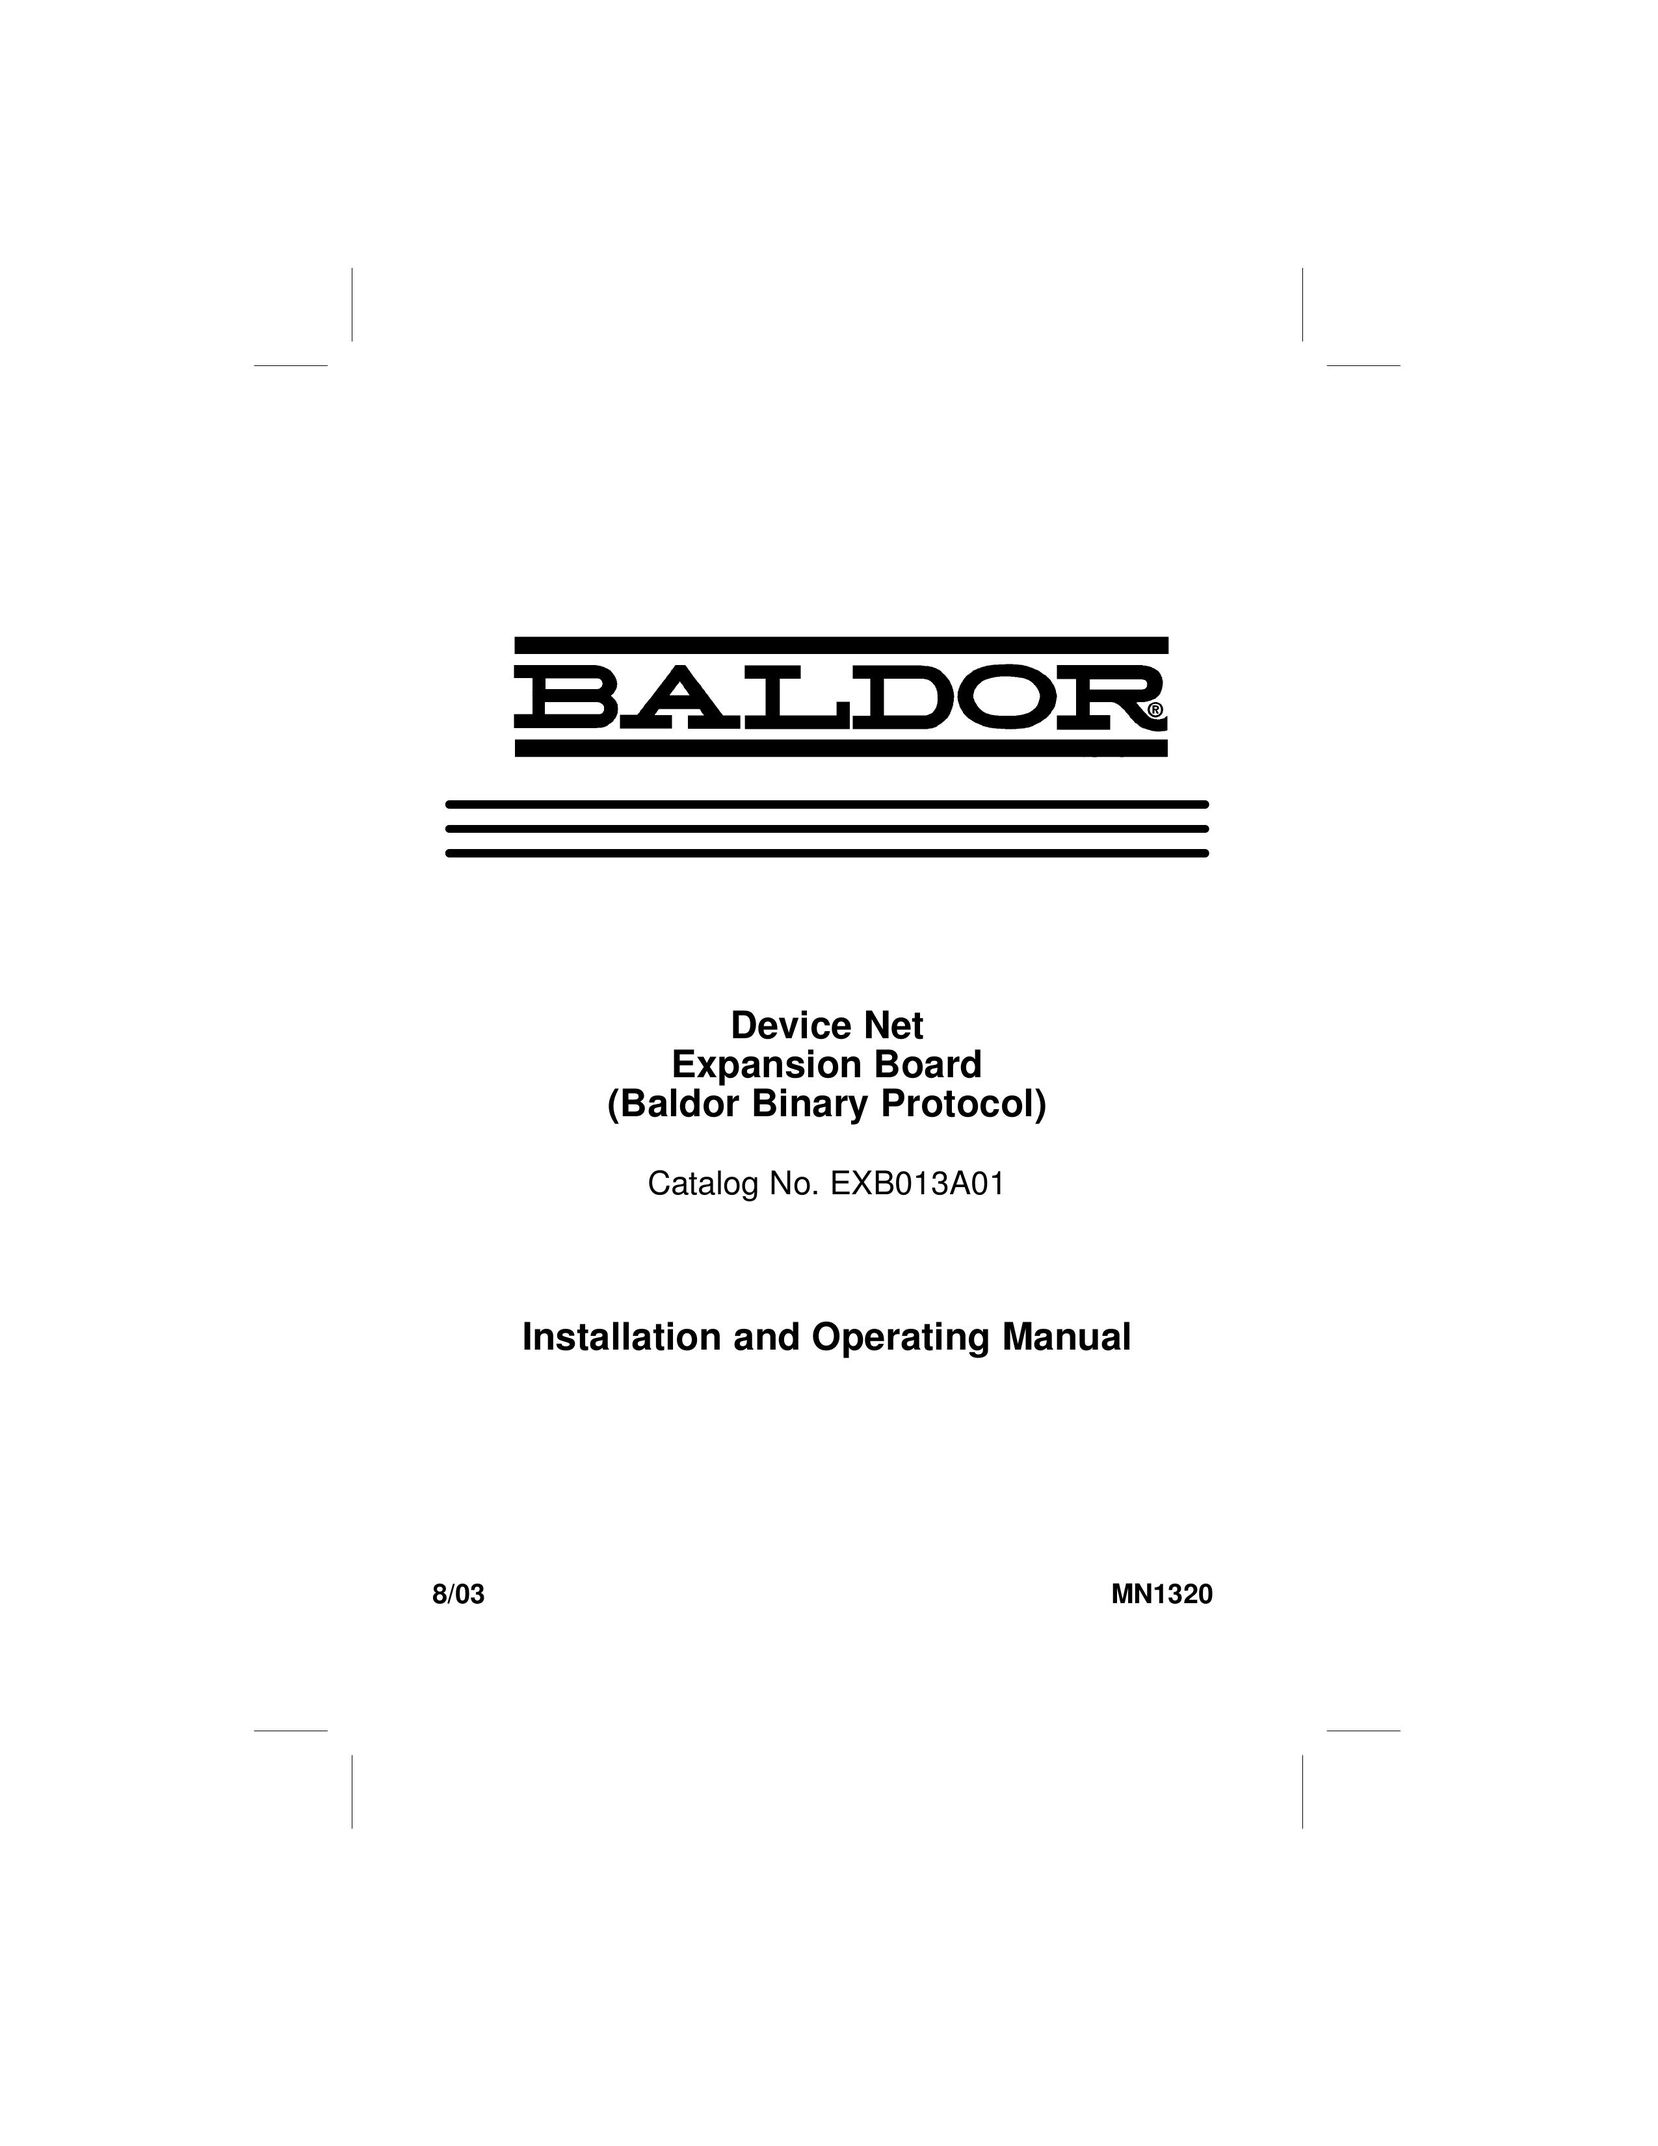 Baldor Device Net Expansion Board Computer Hardware User Manual